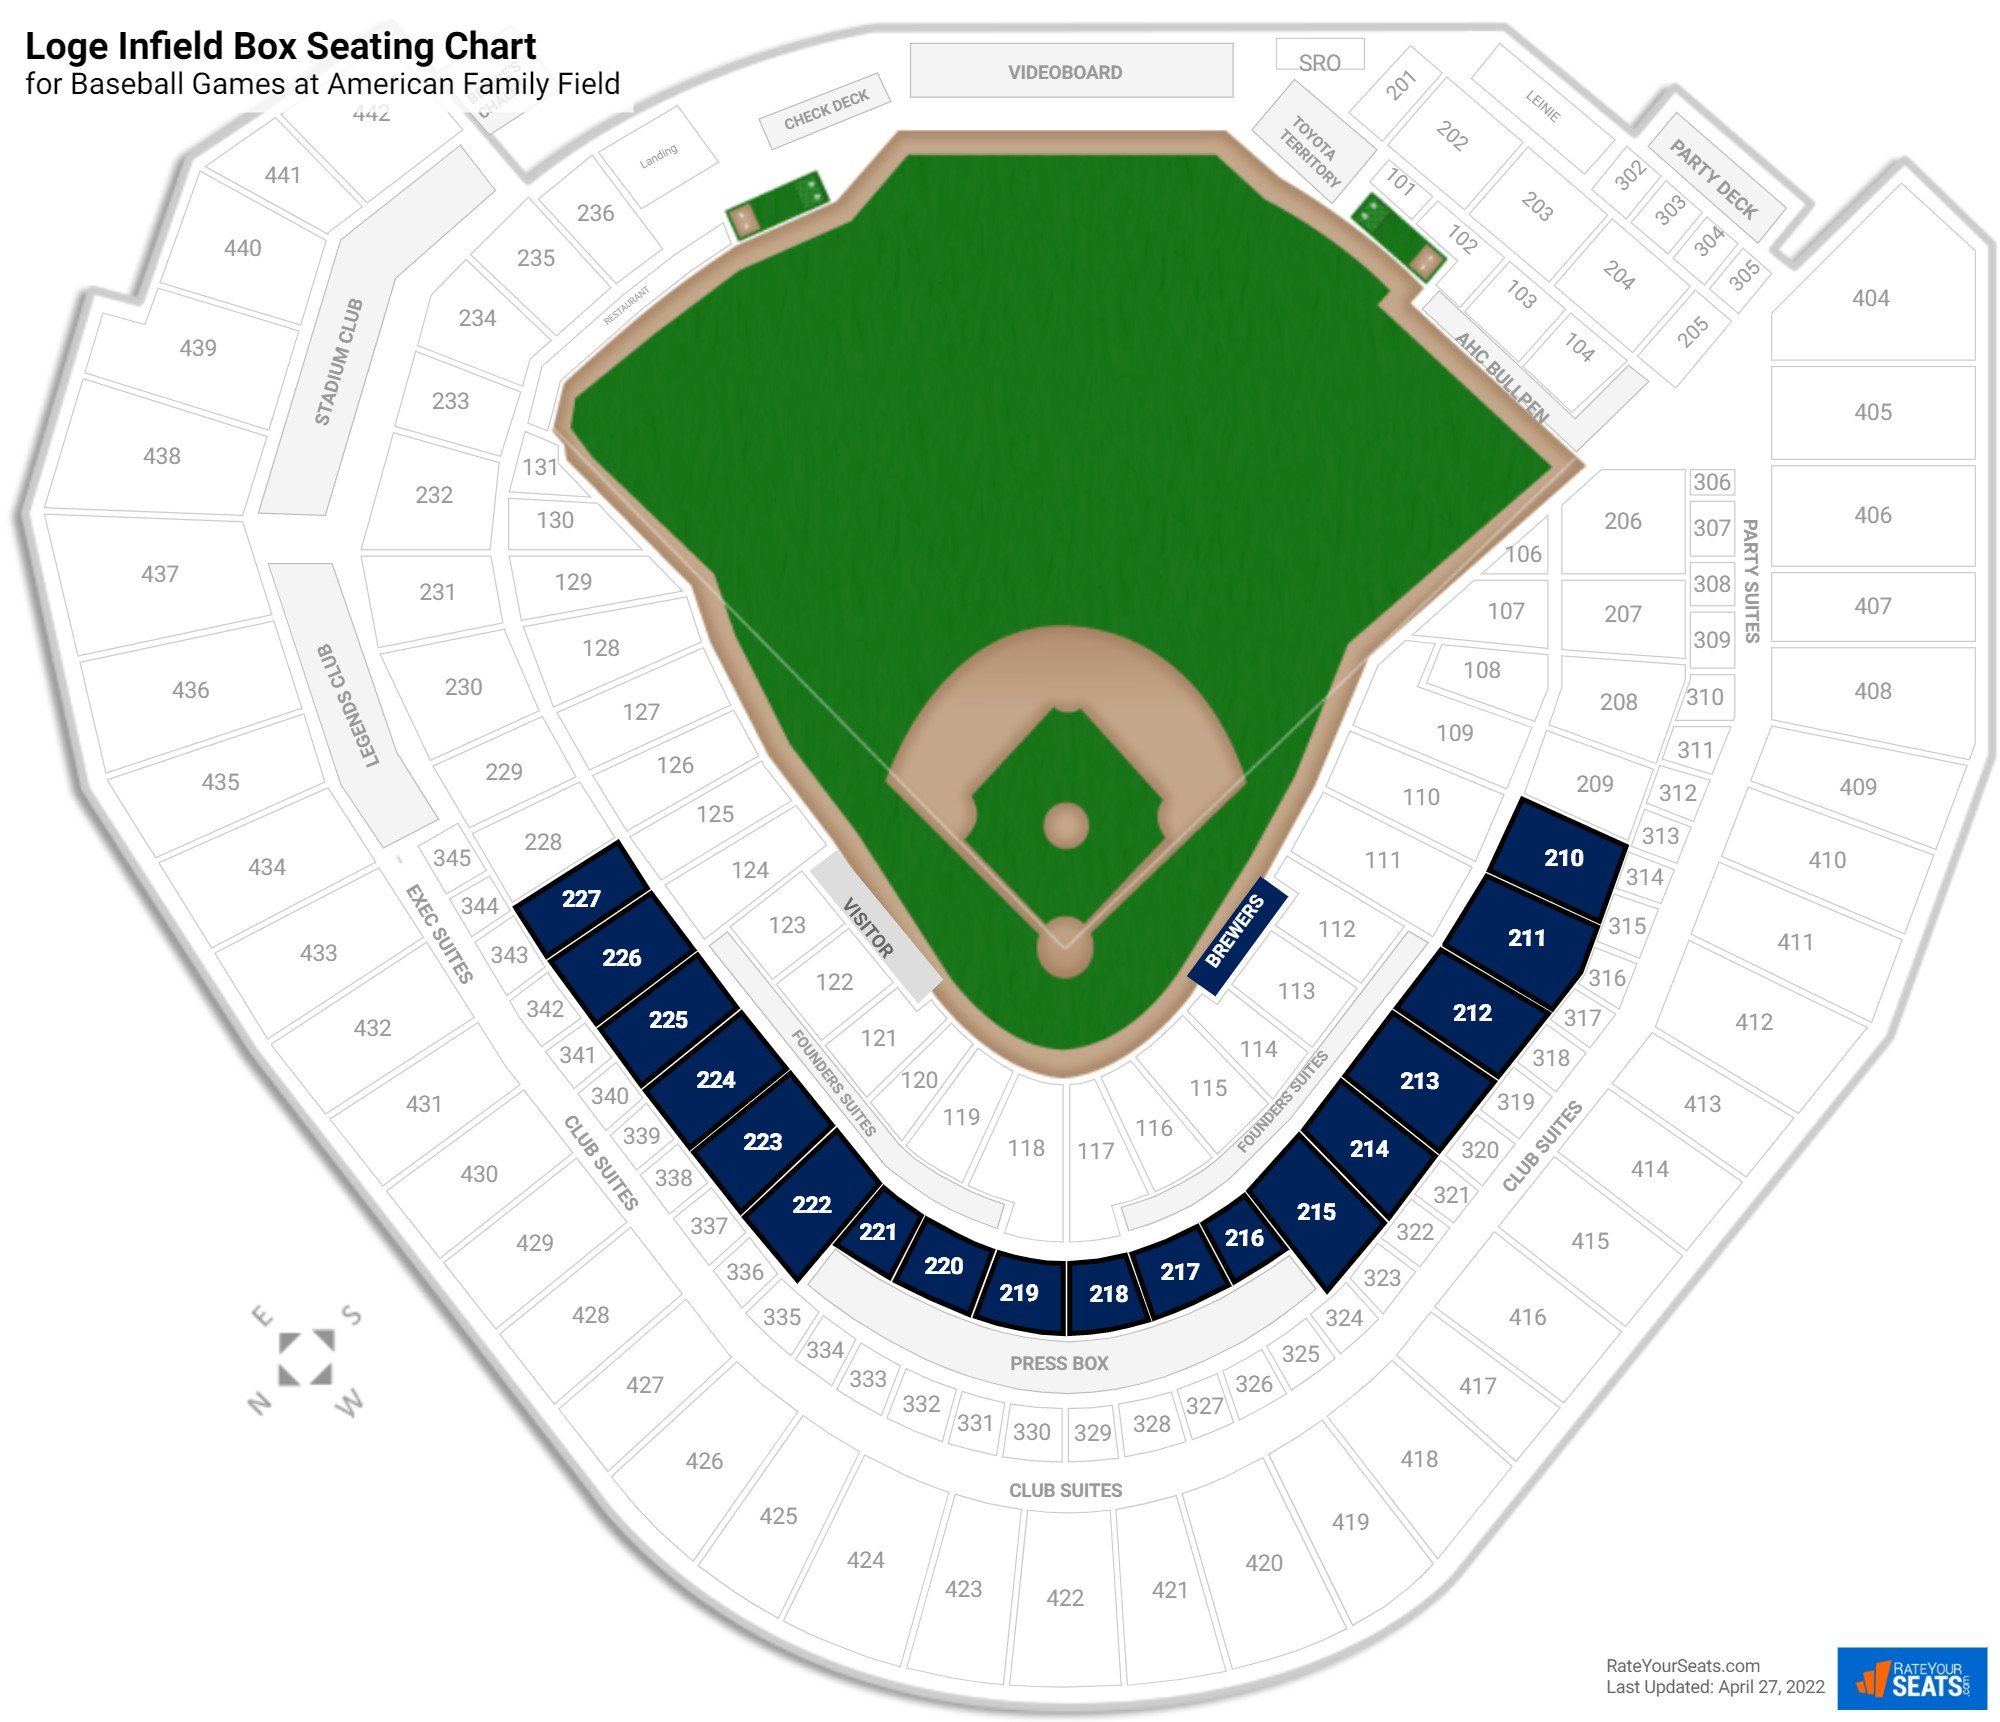 Baseball Loge Infield Box Seating Chart at American Family Field